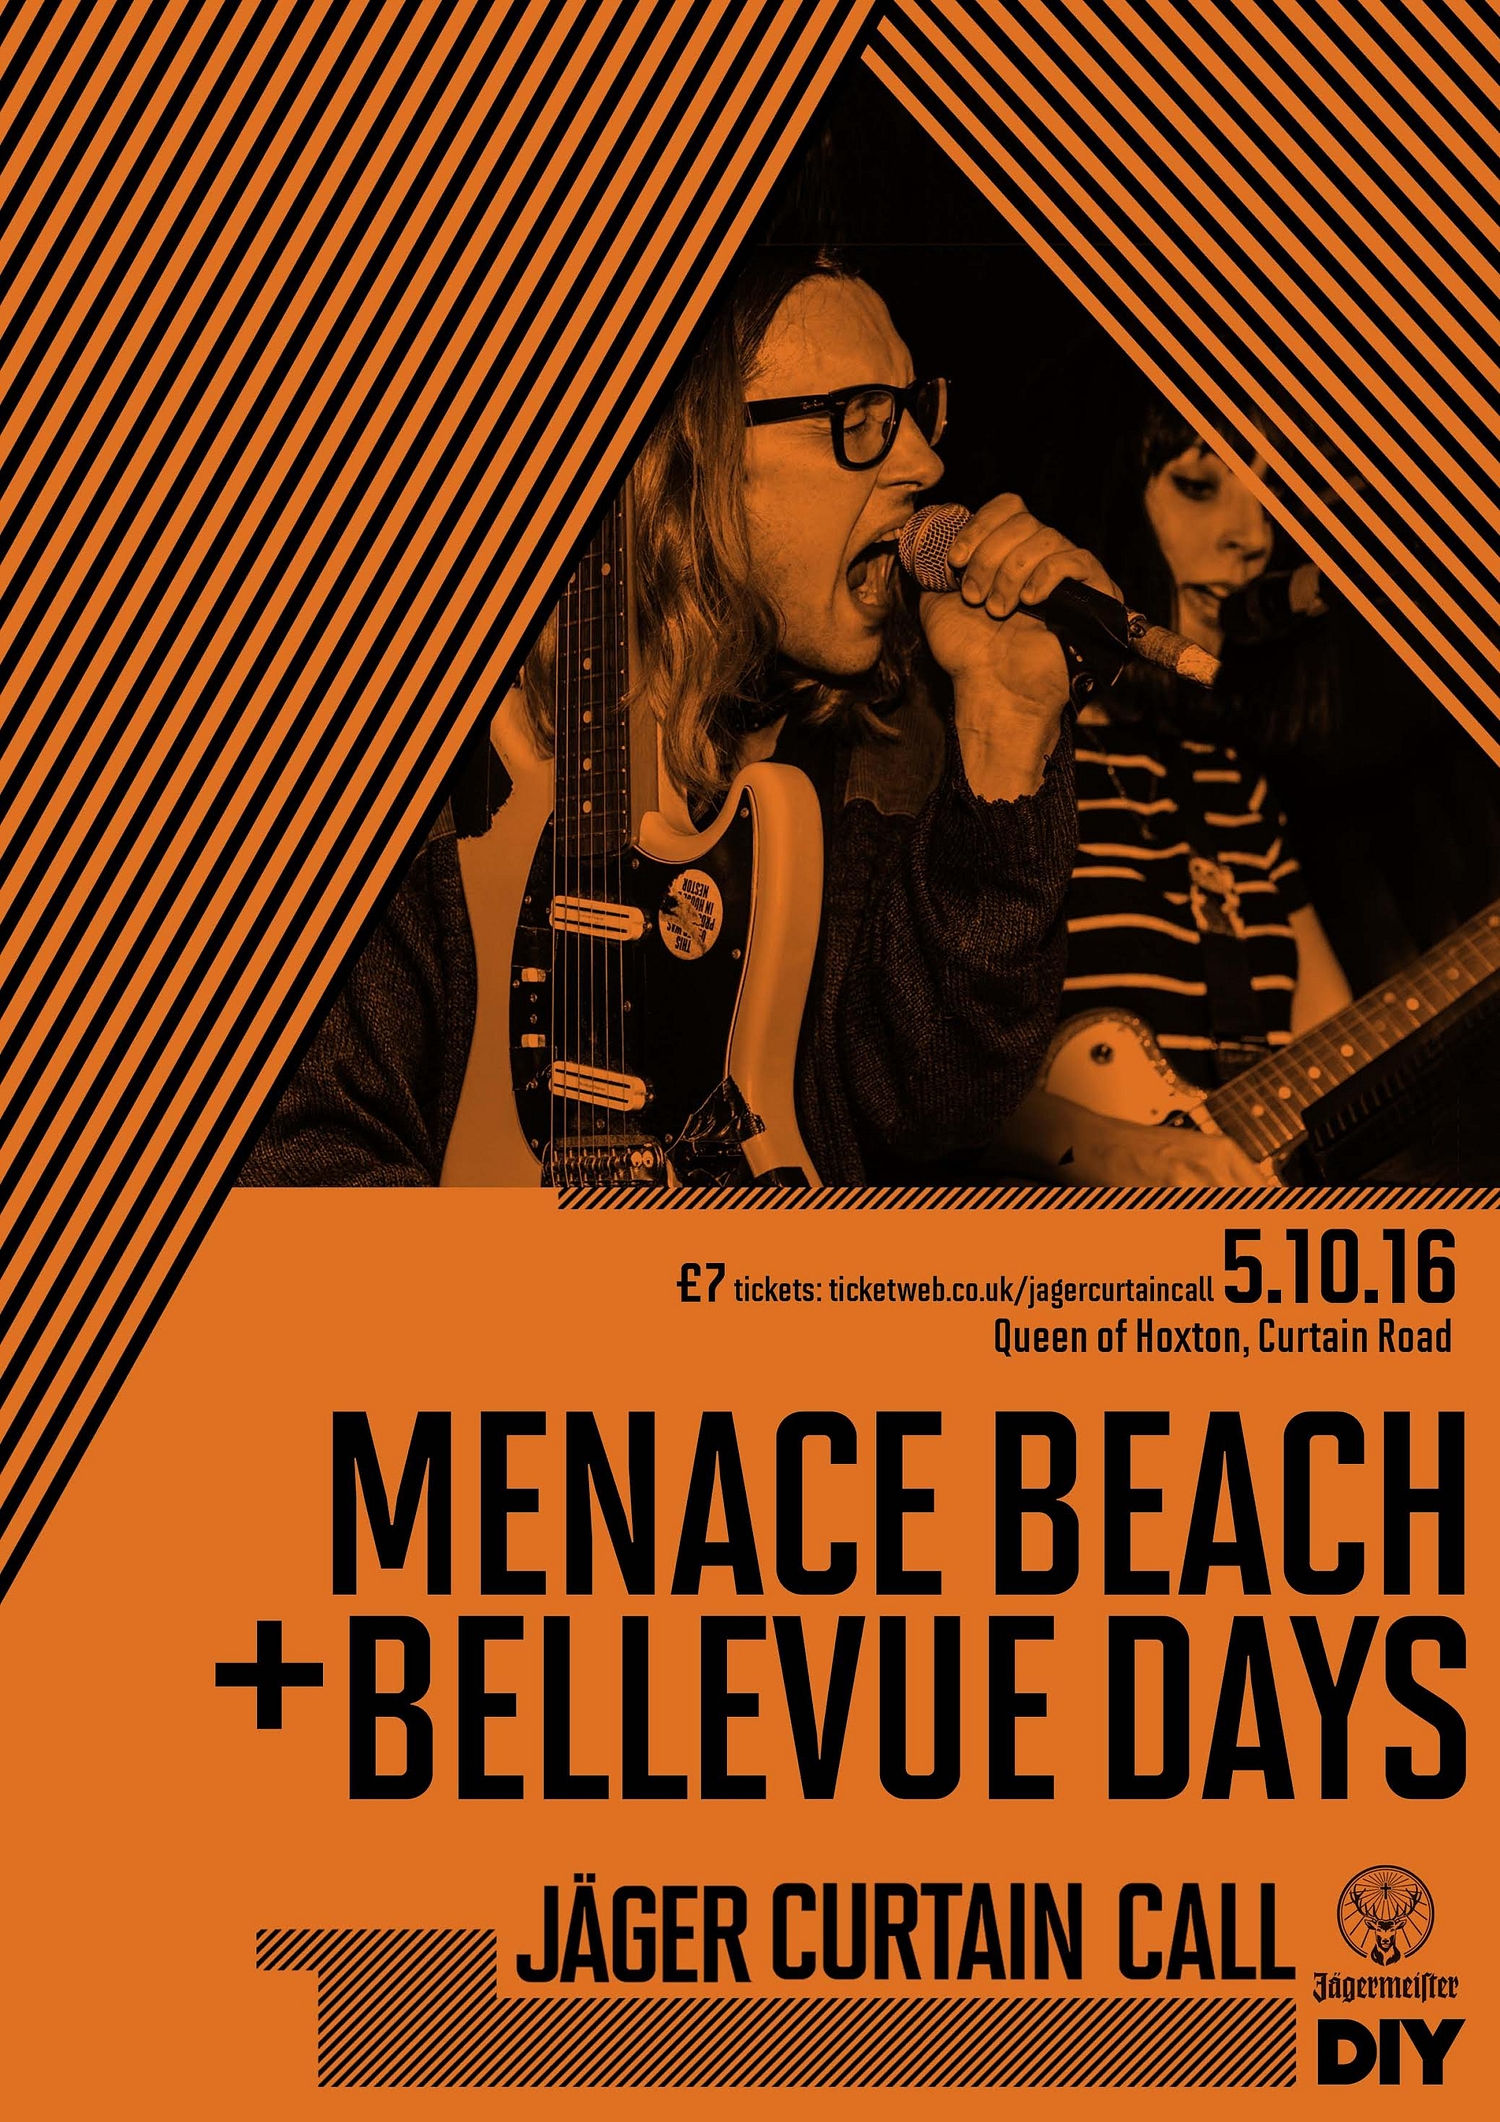 Menace Beach join Bellevue Days for Jäger Curtain Call show